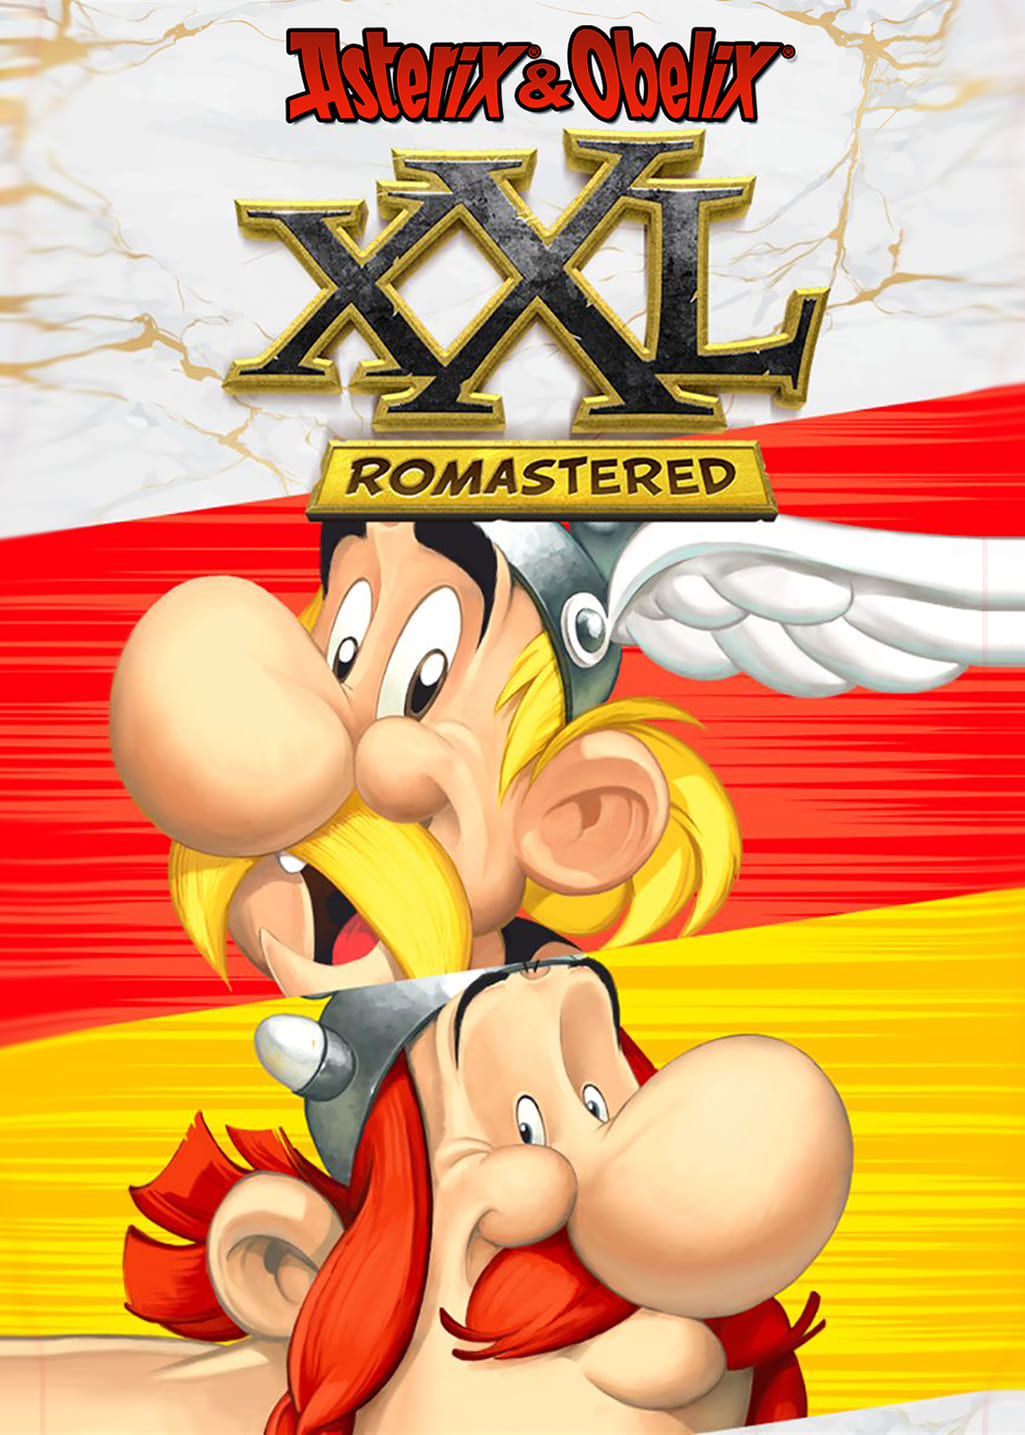 Asterix & Obelix Romastered